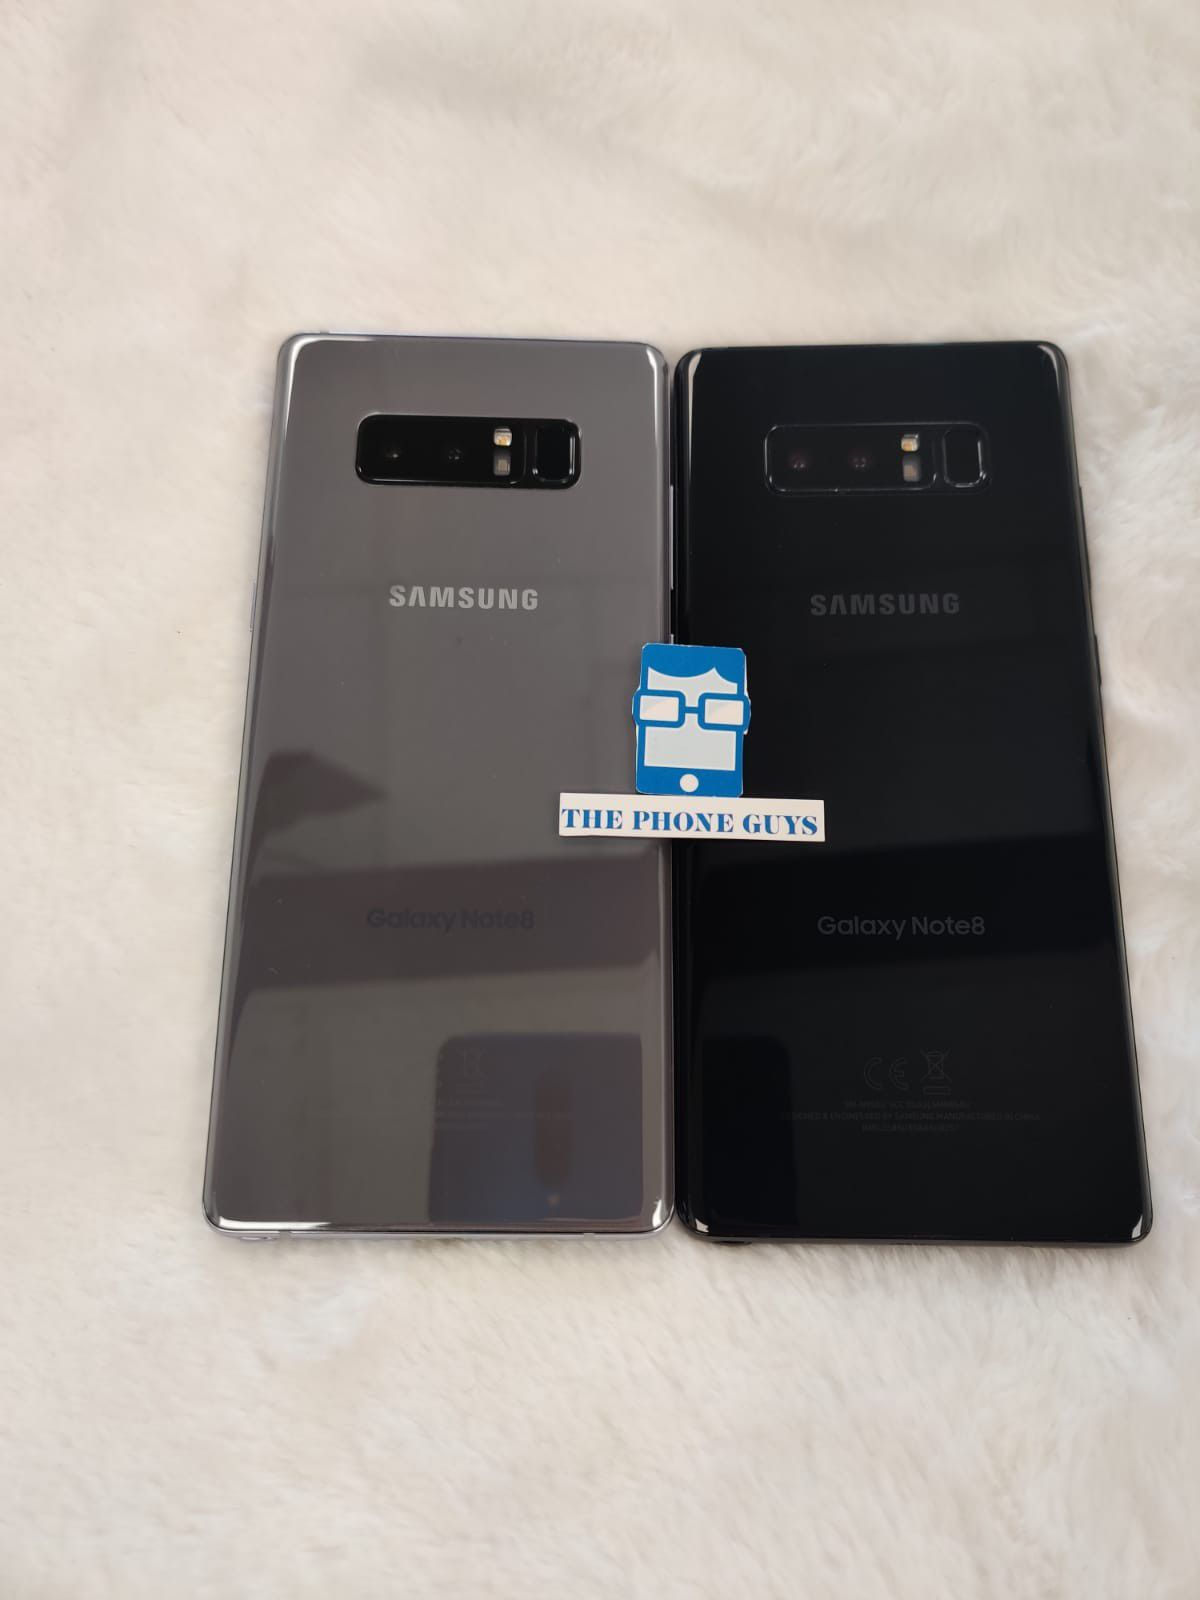 Samsung Galaxy Note 8 Unlocked